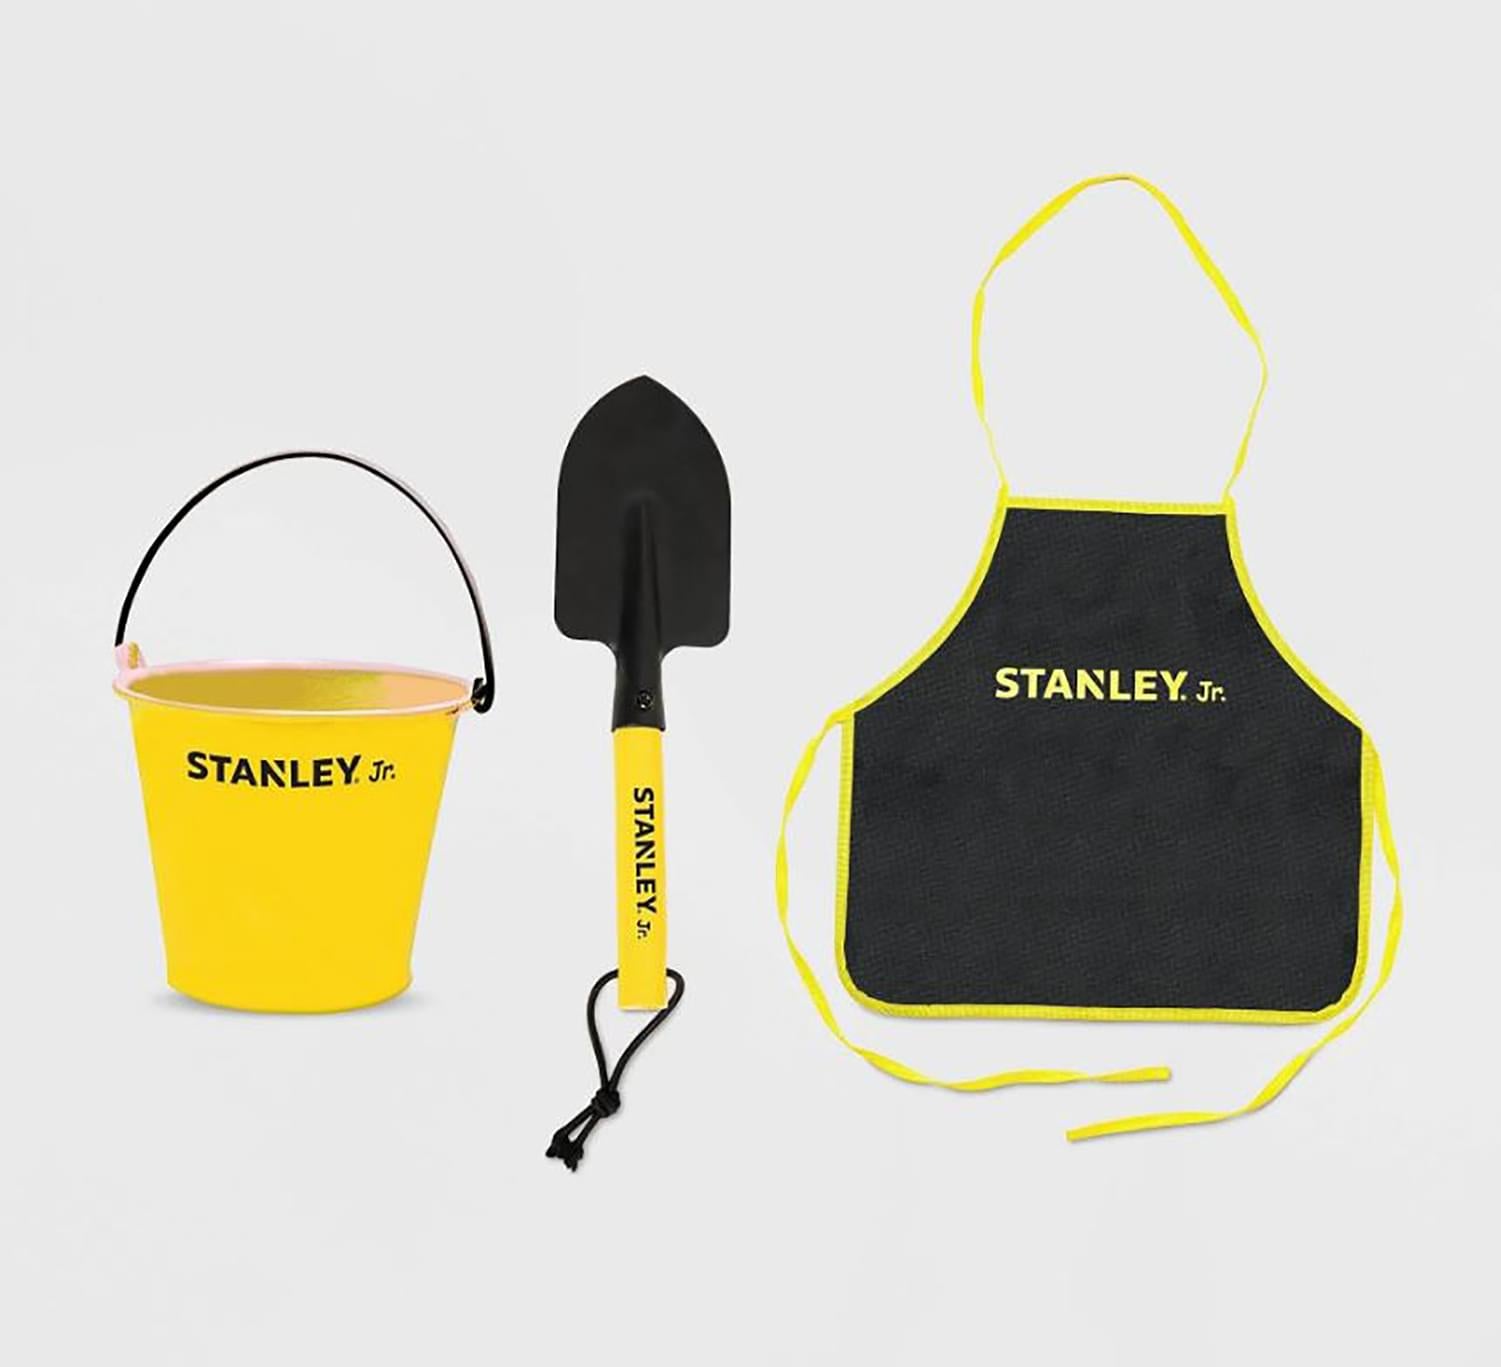 Stanley Jr. 3 Piece Garden Tool Set | Real Tools for Kids